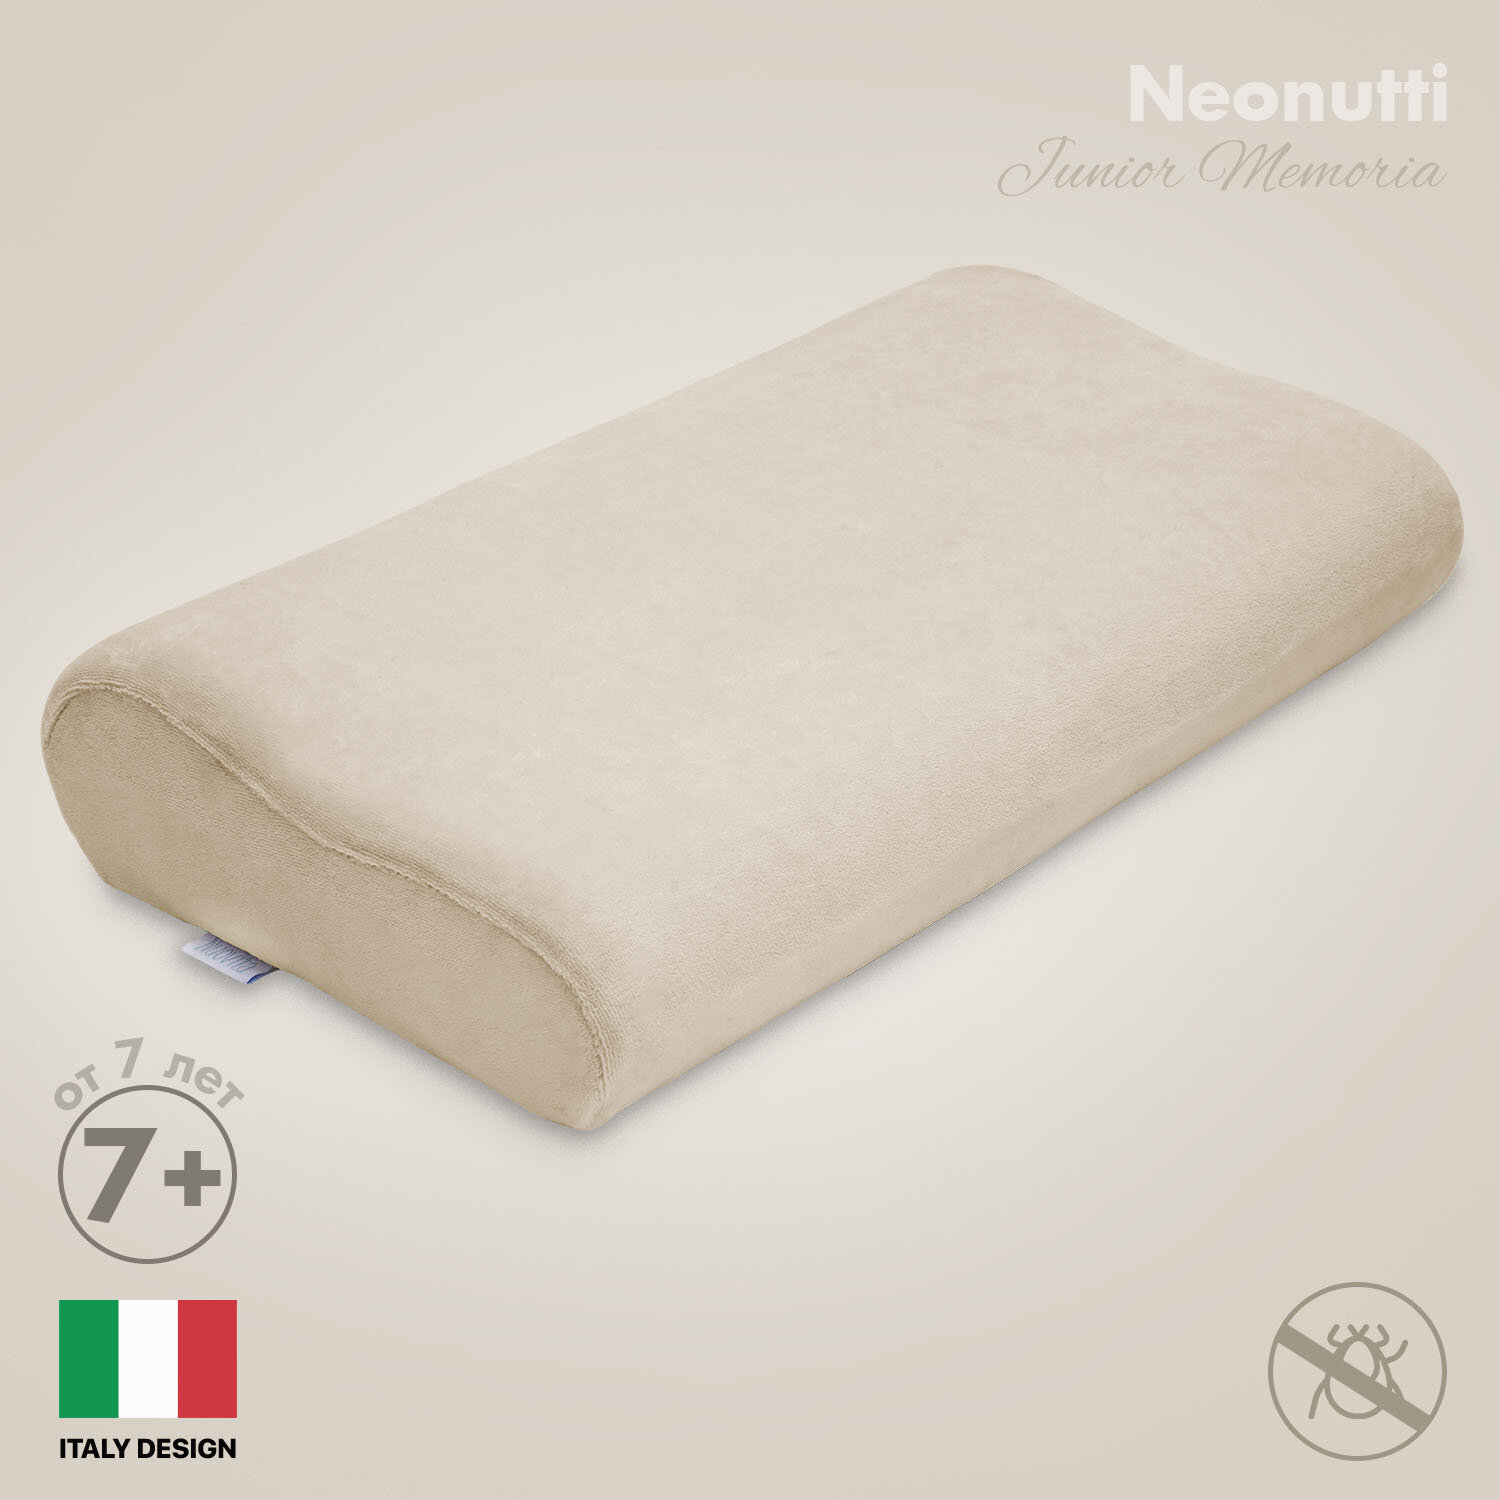 Подушка детская Nuovita Neonutti Junior Memoria (Bianco/Белый)